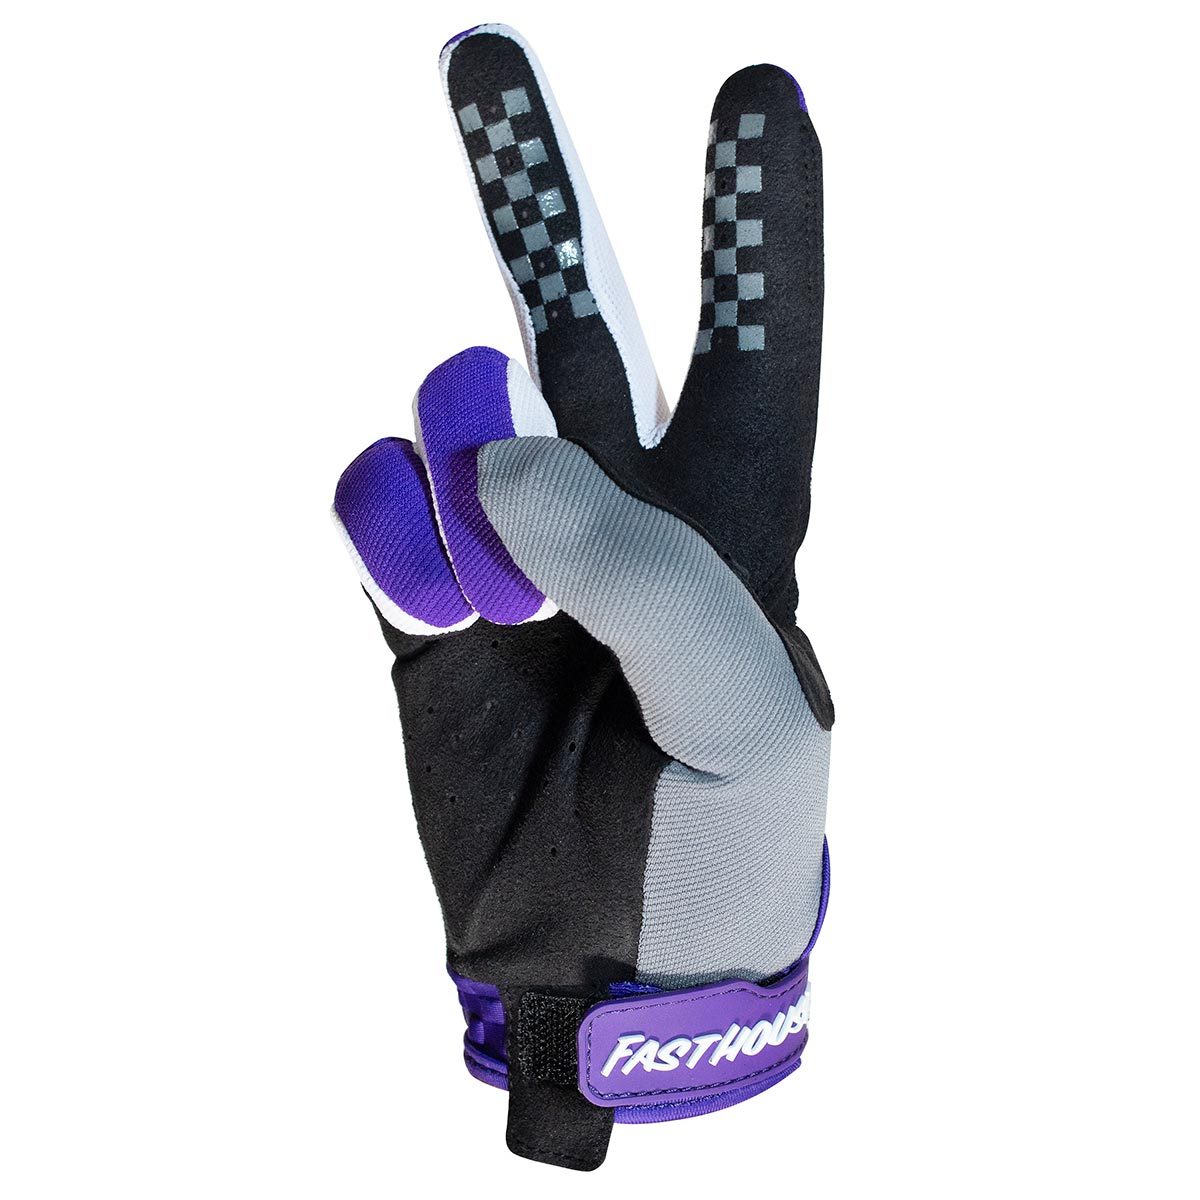 Howler Glove - Purple/Charcoal